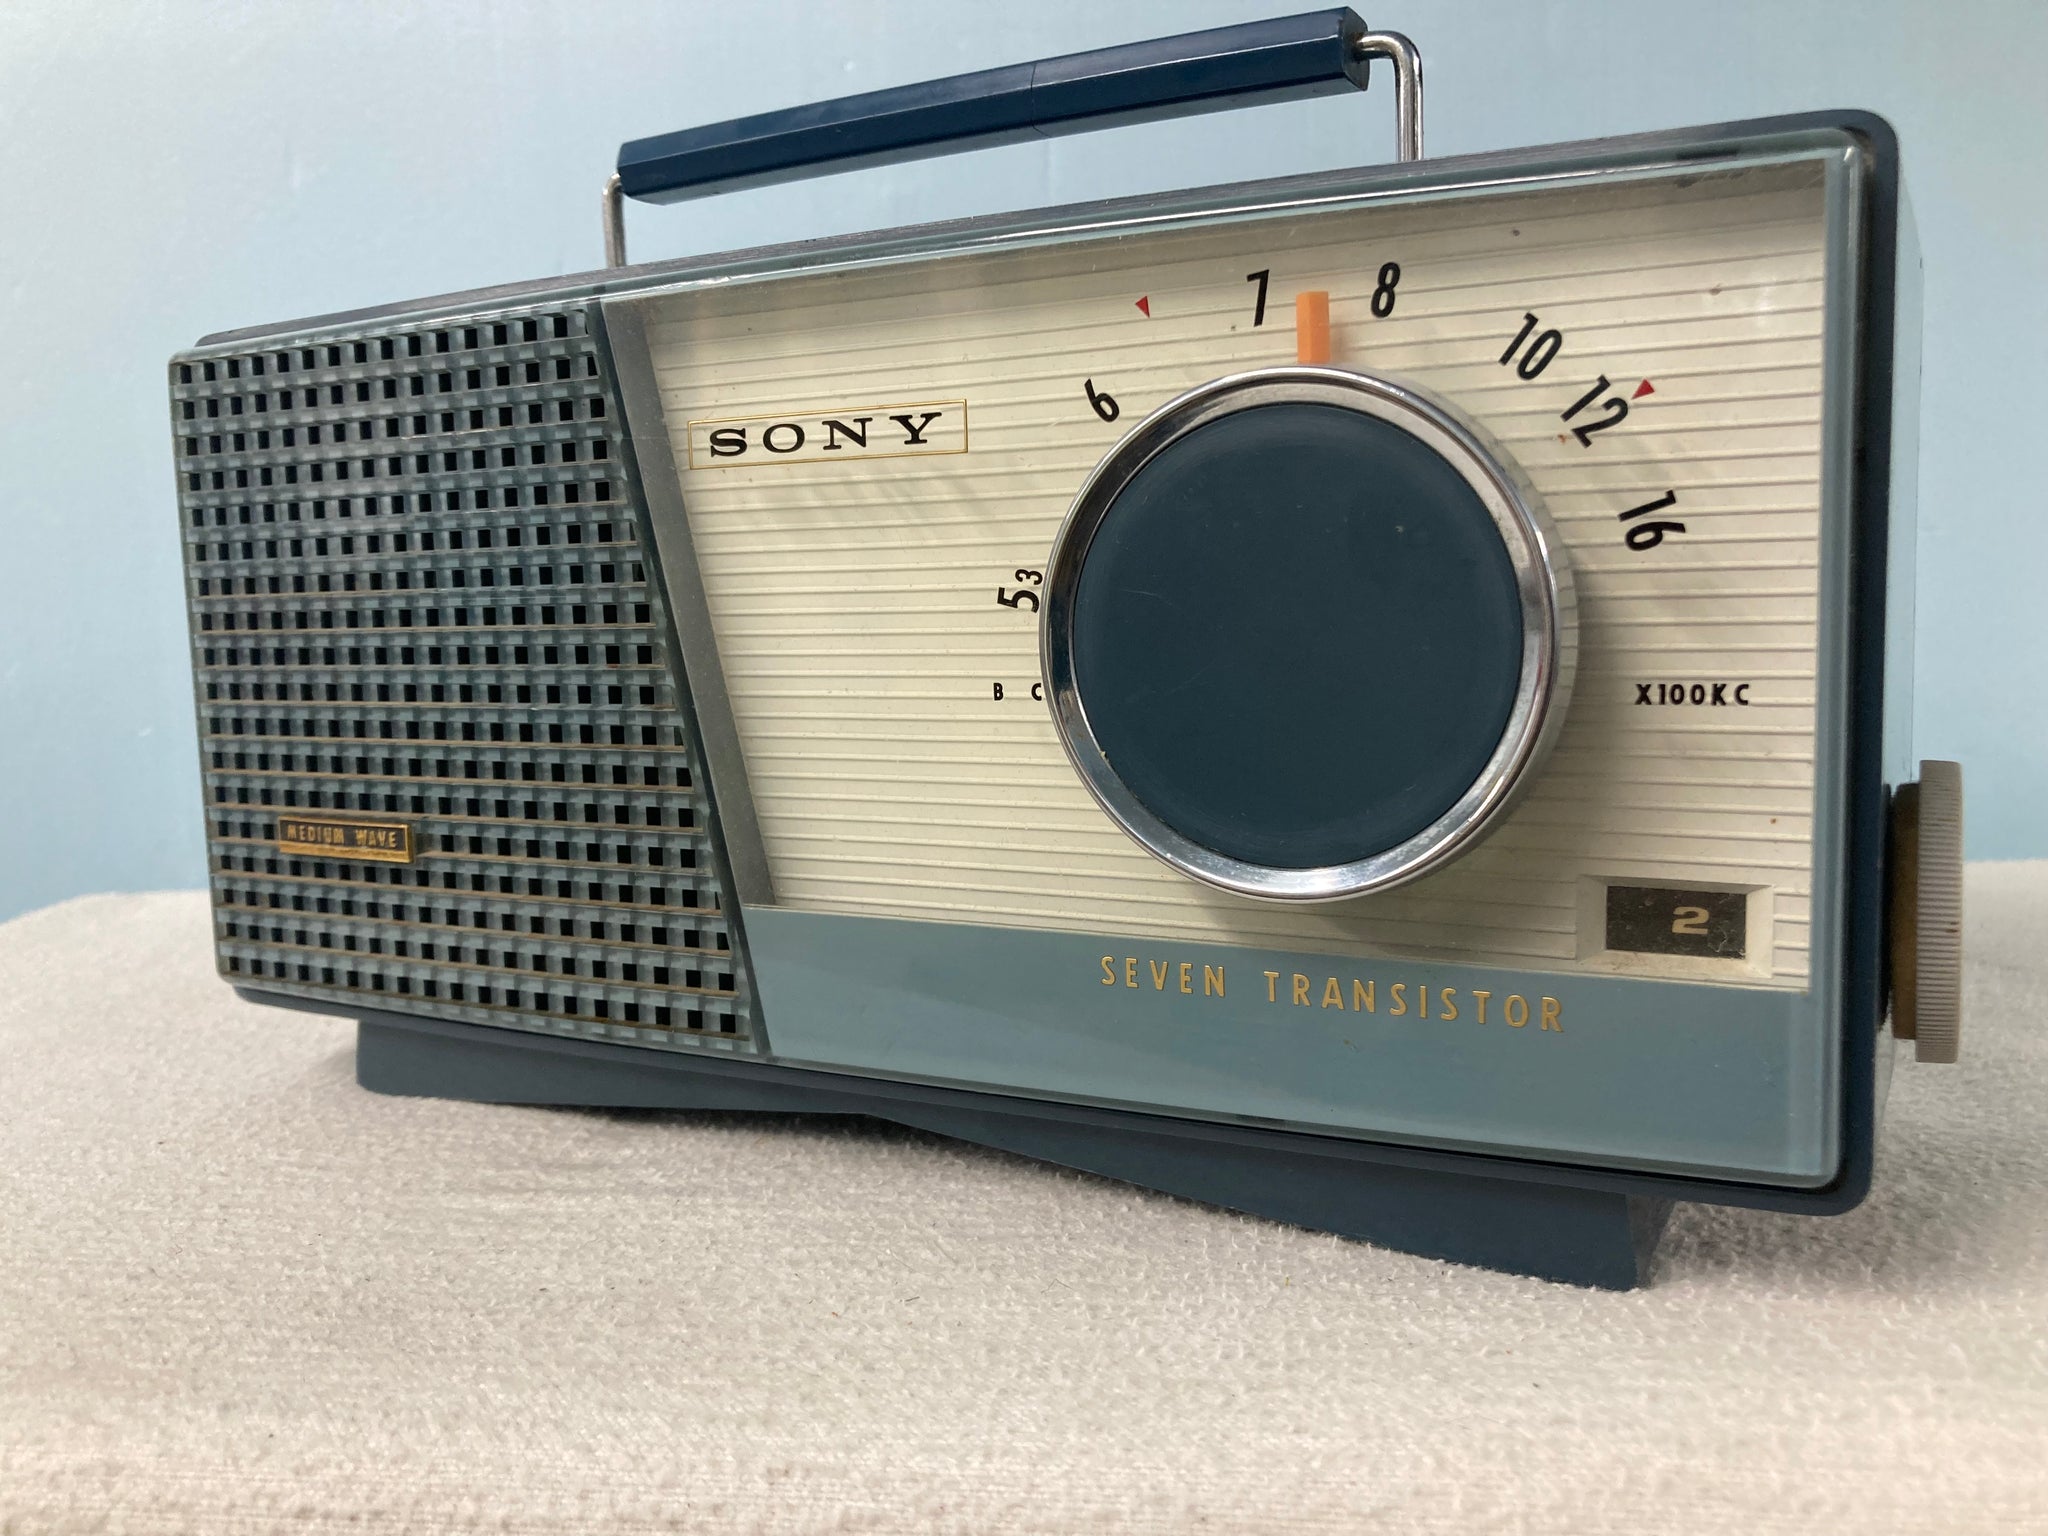 Sony TR 7120 Early Transistor Radio With Bluetooth Functionality, Antique,  Retro, Vintage Tube Radios & Bluetooth